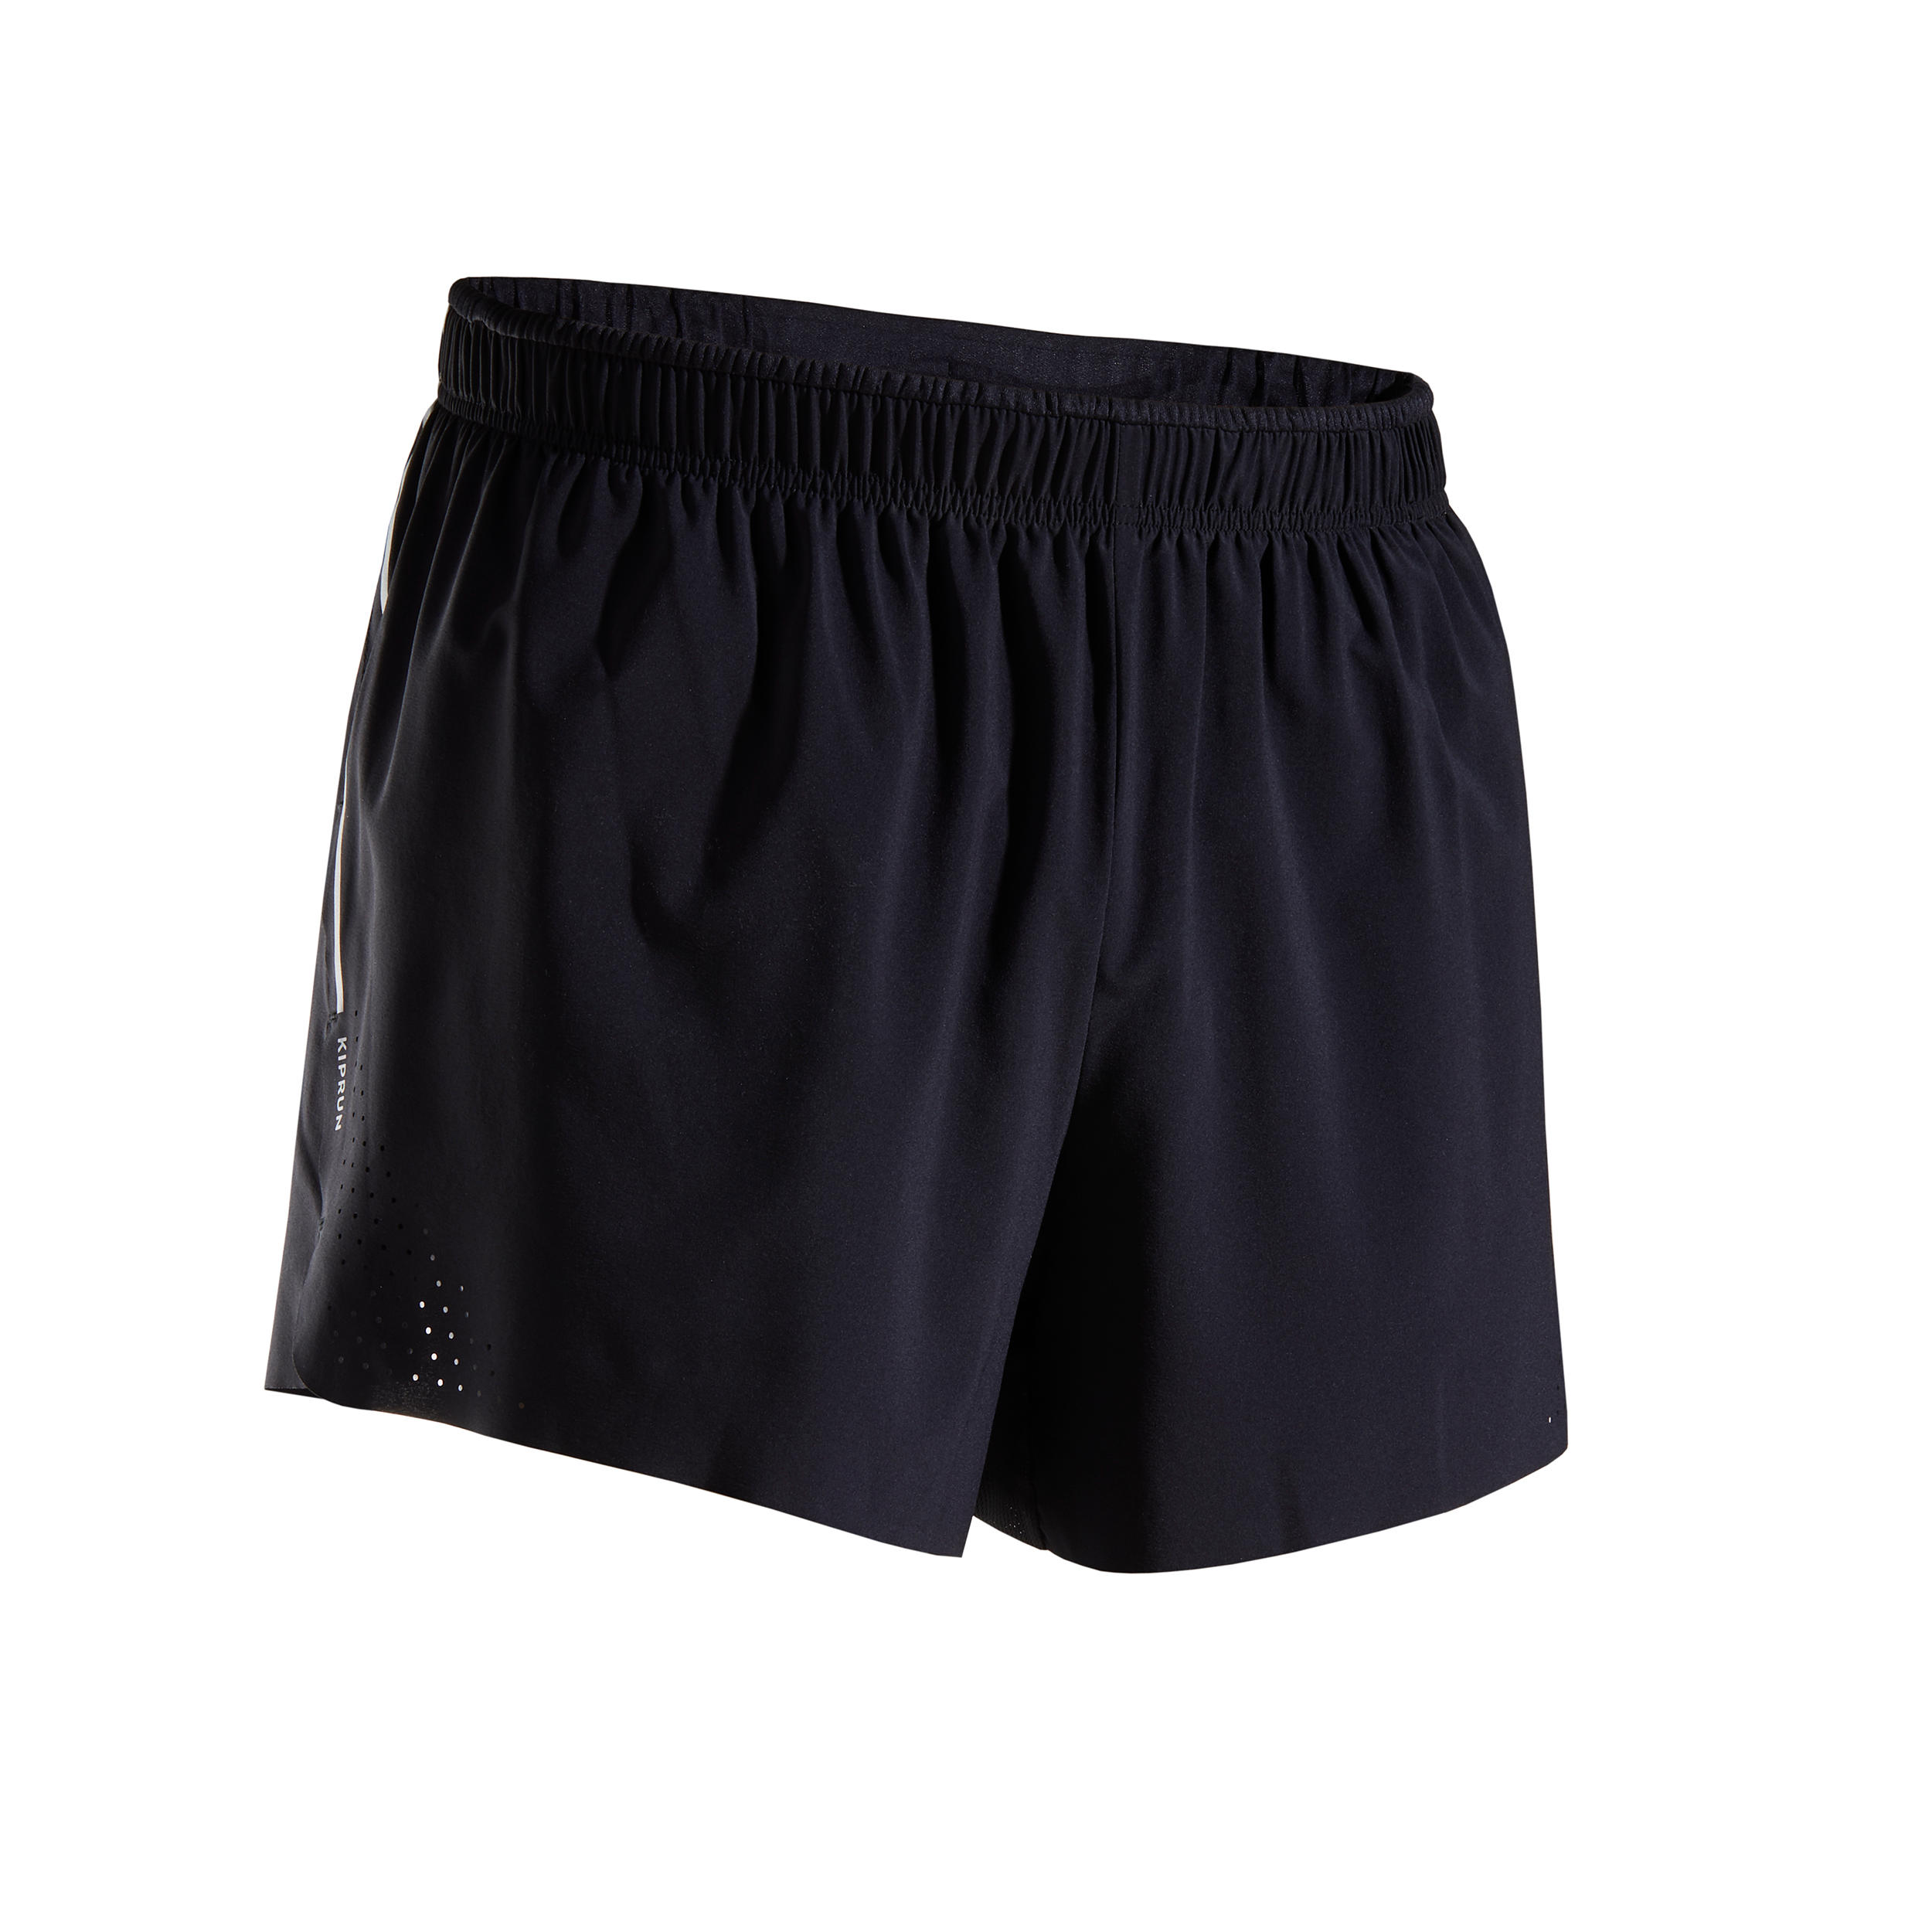 decathlon black shorts